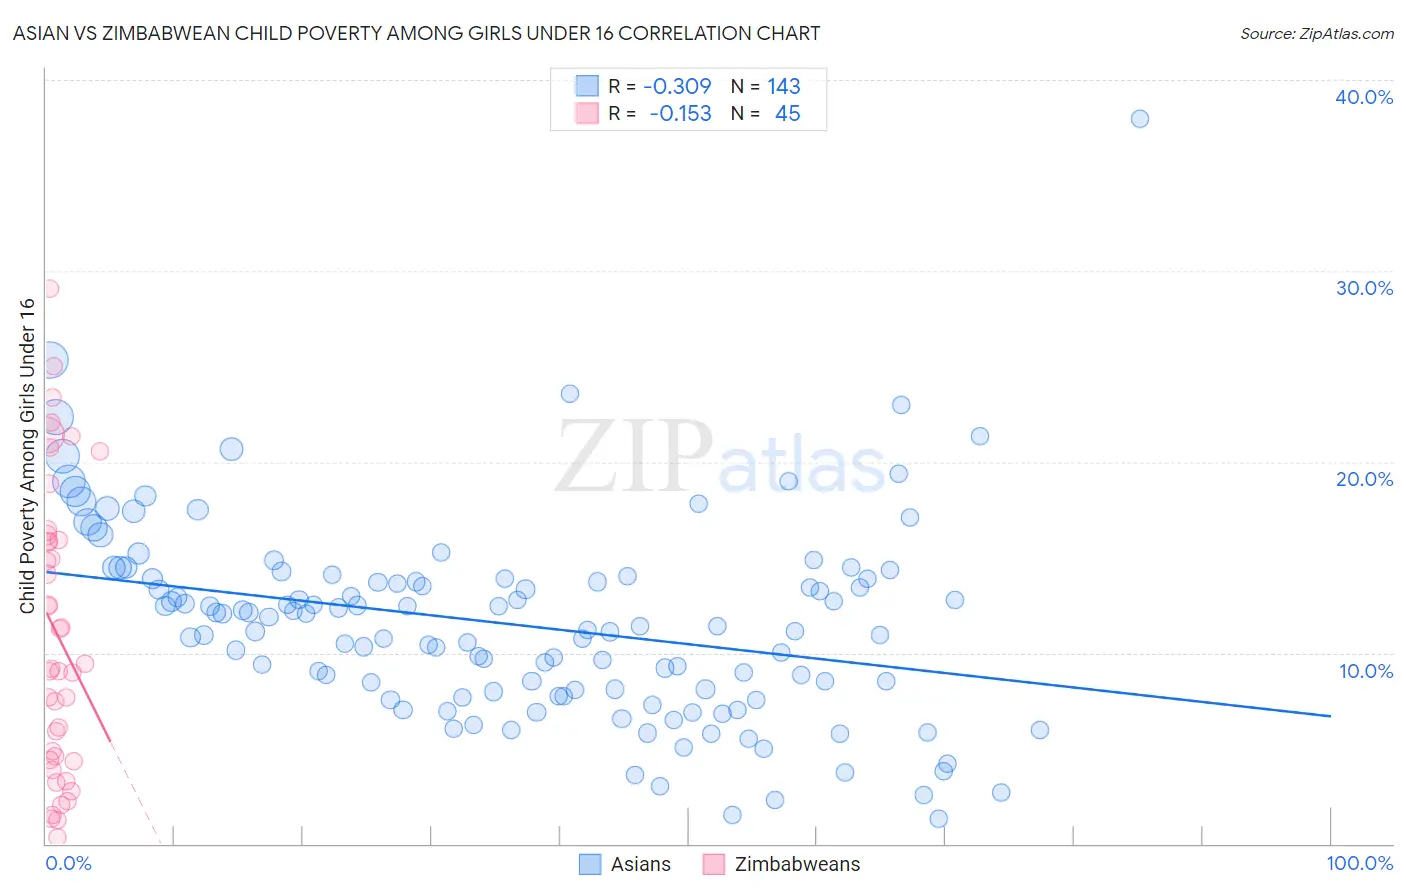 Asian vs Zimbabwean Child Poverty Among Girls Under 16